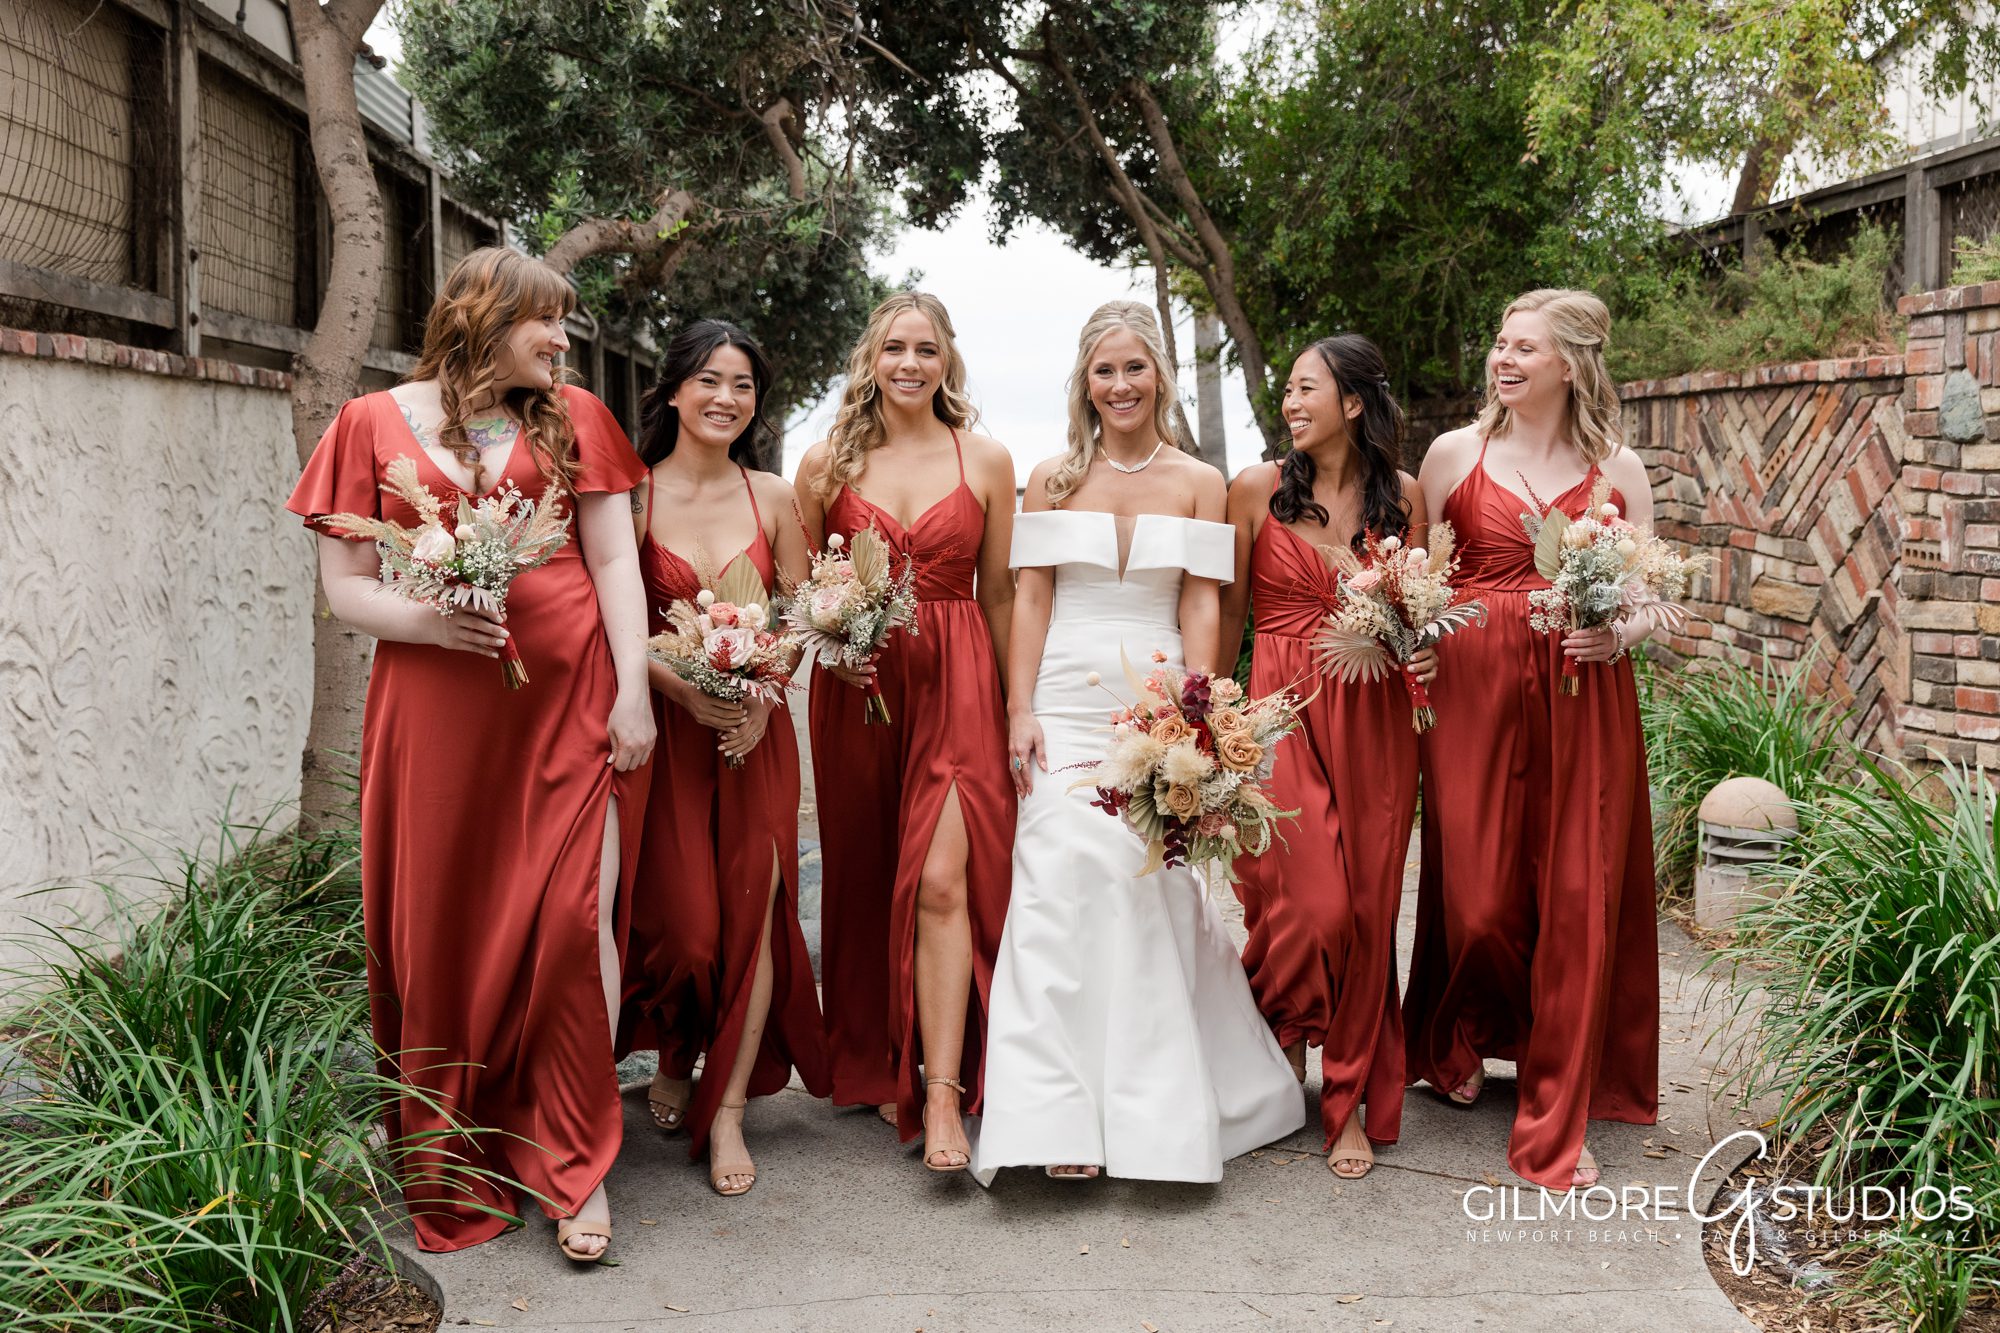 Occasions at Laguna Village wedding photography Laguna Beach, CA wedding venue - Gilmore Studios